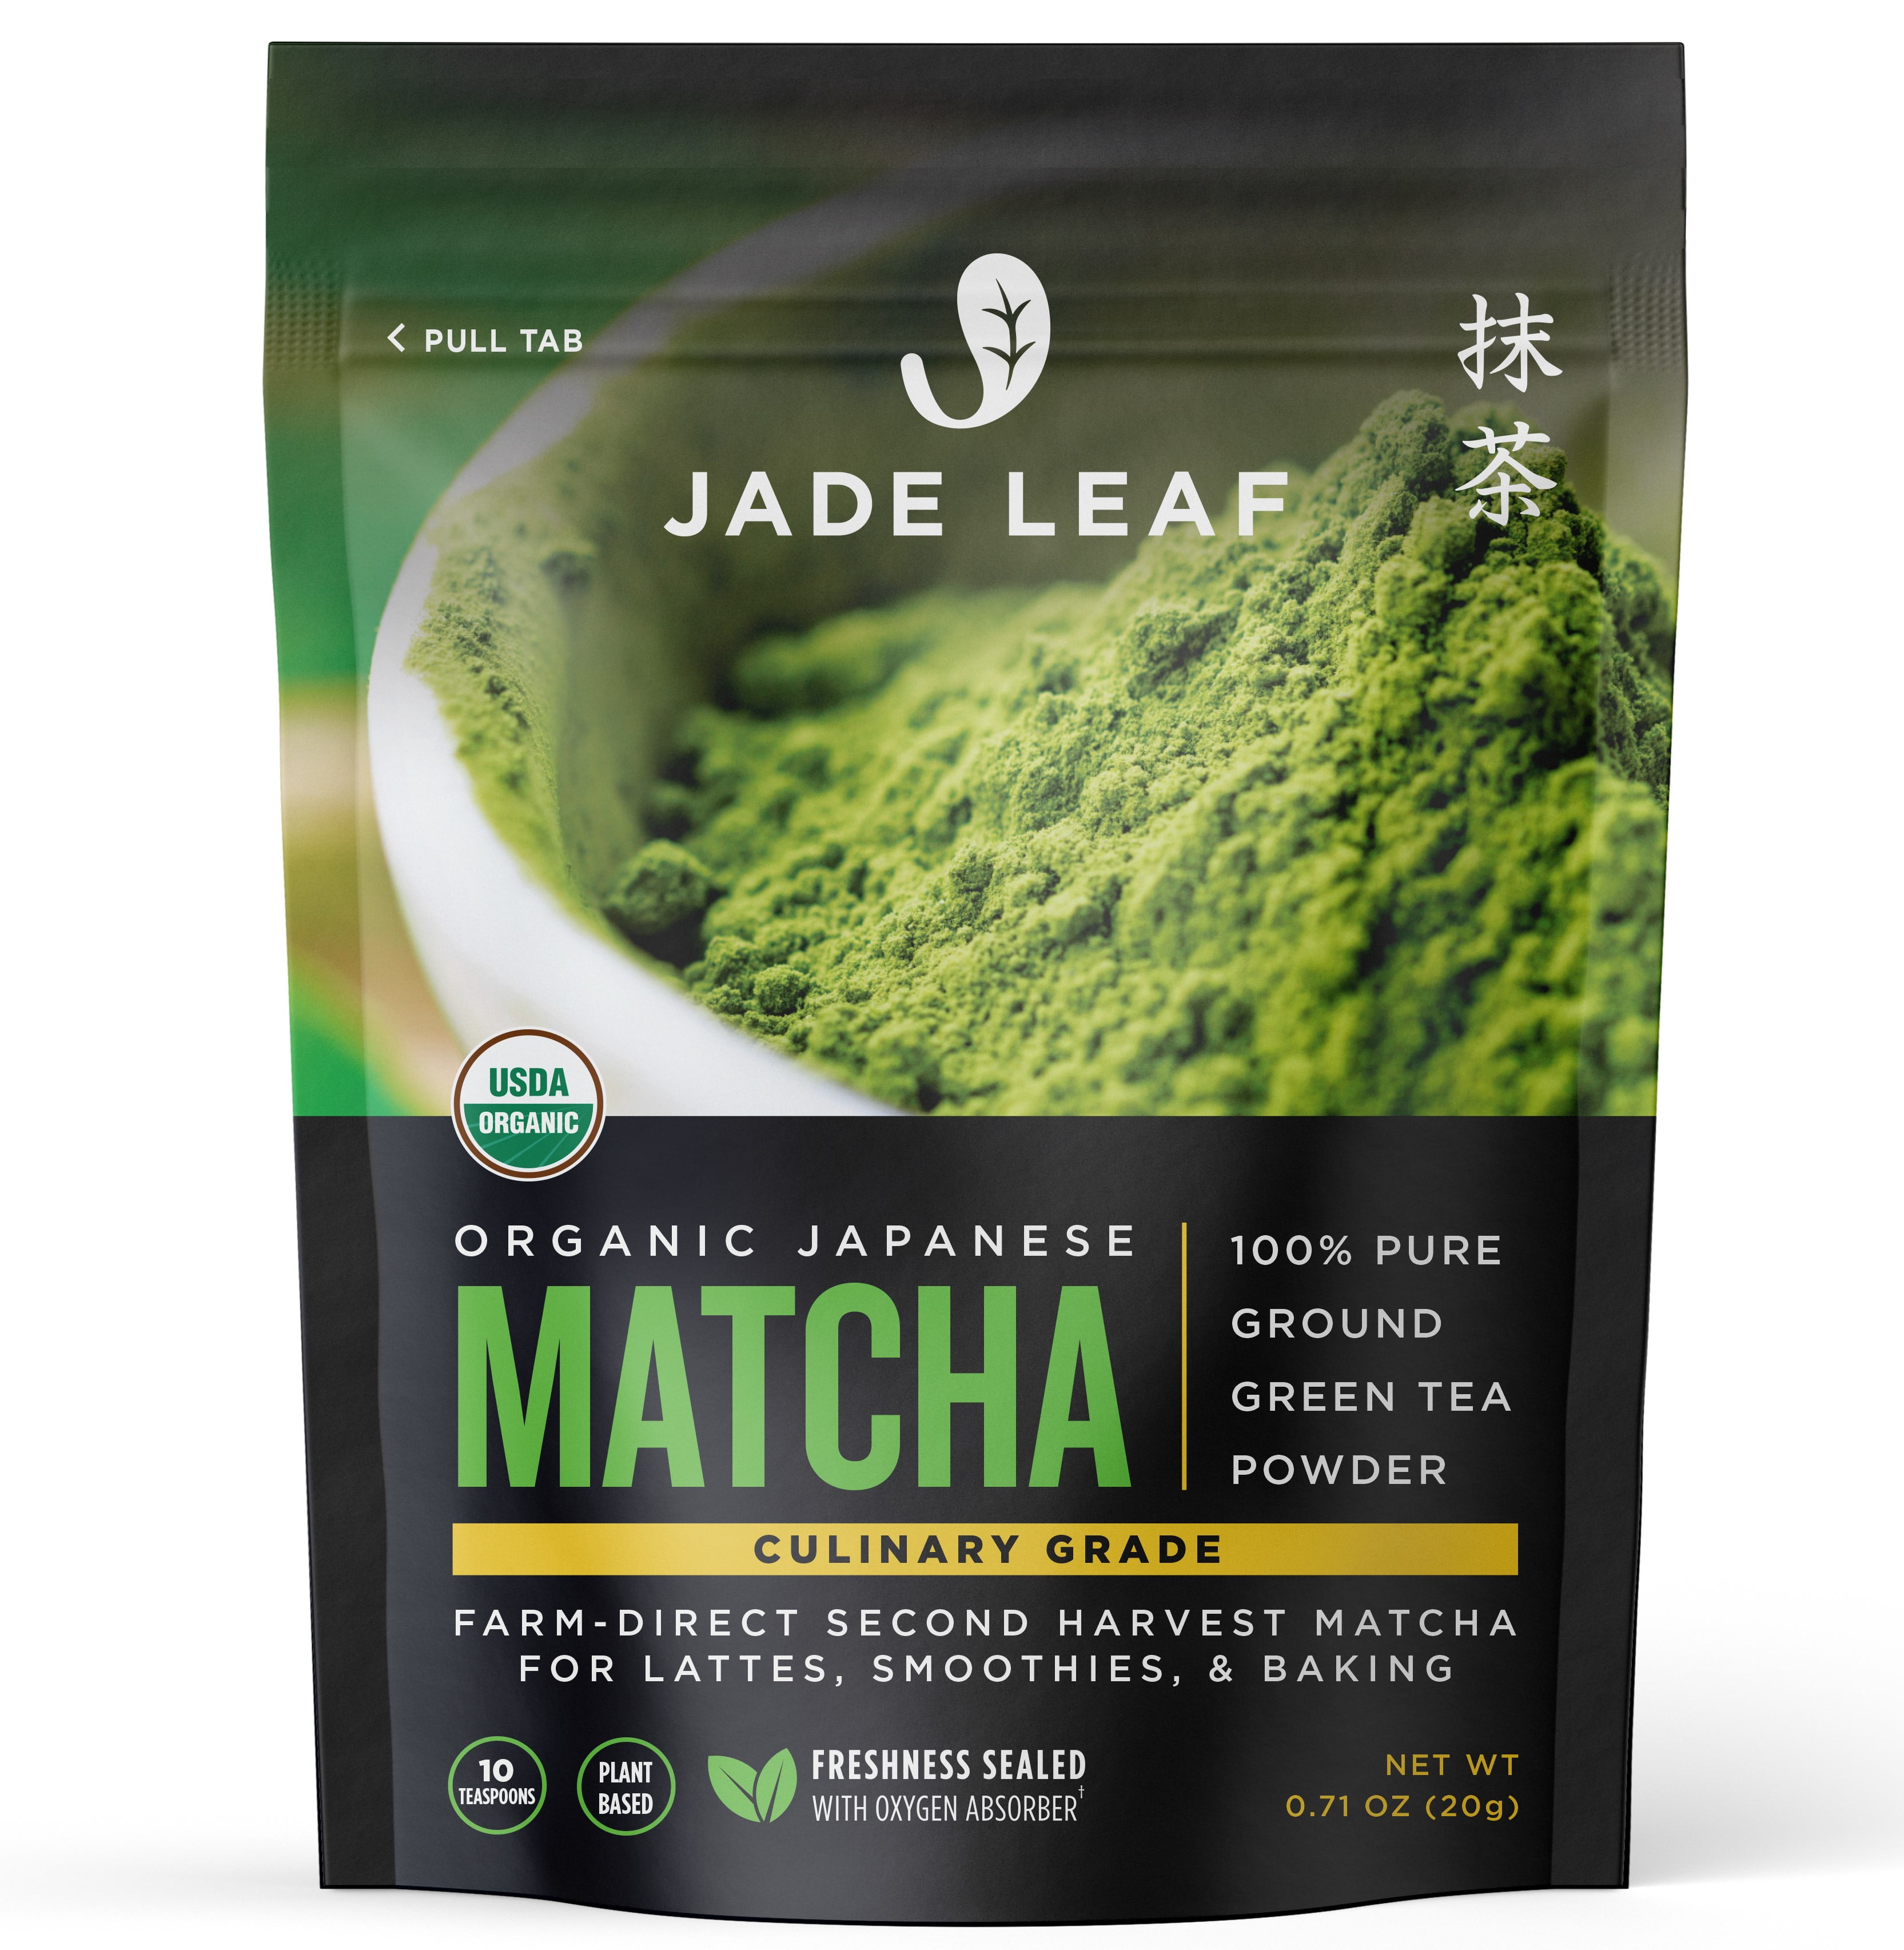 Jade Leaf Matcha Organic Japanese Culinary Matcha Powdered Tea, 0.7 Oz